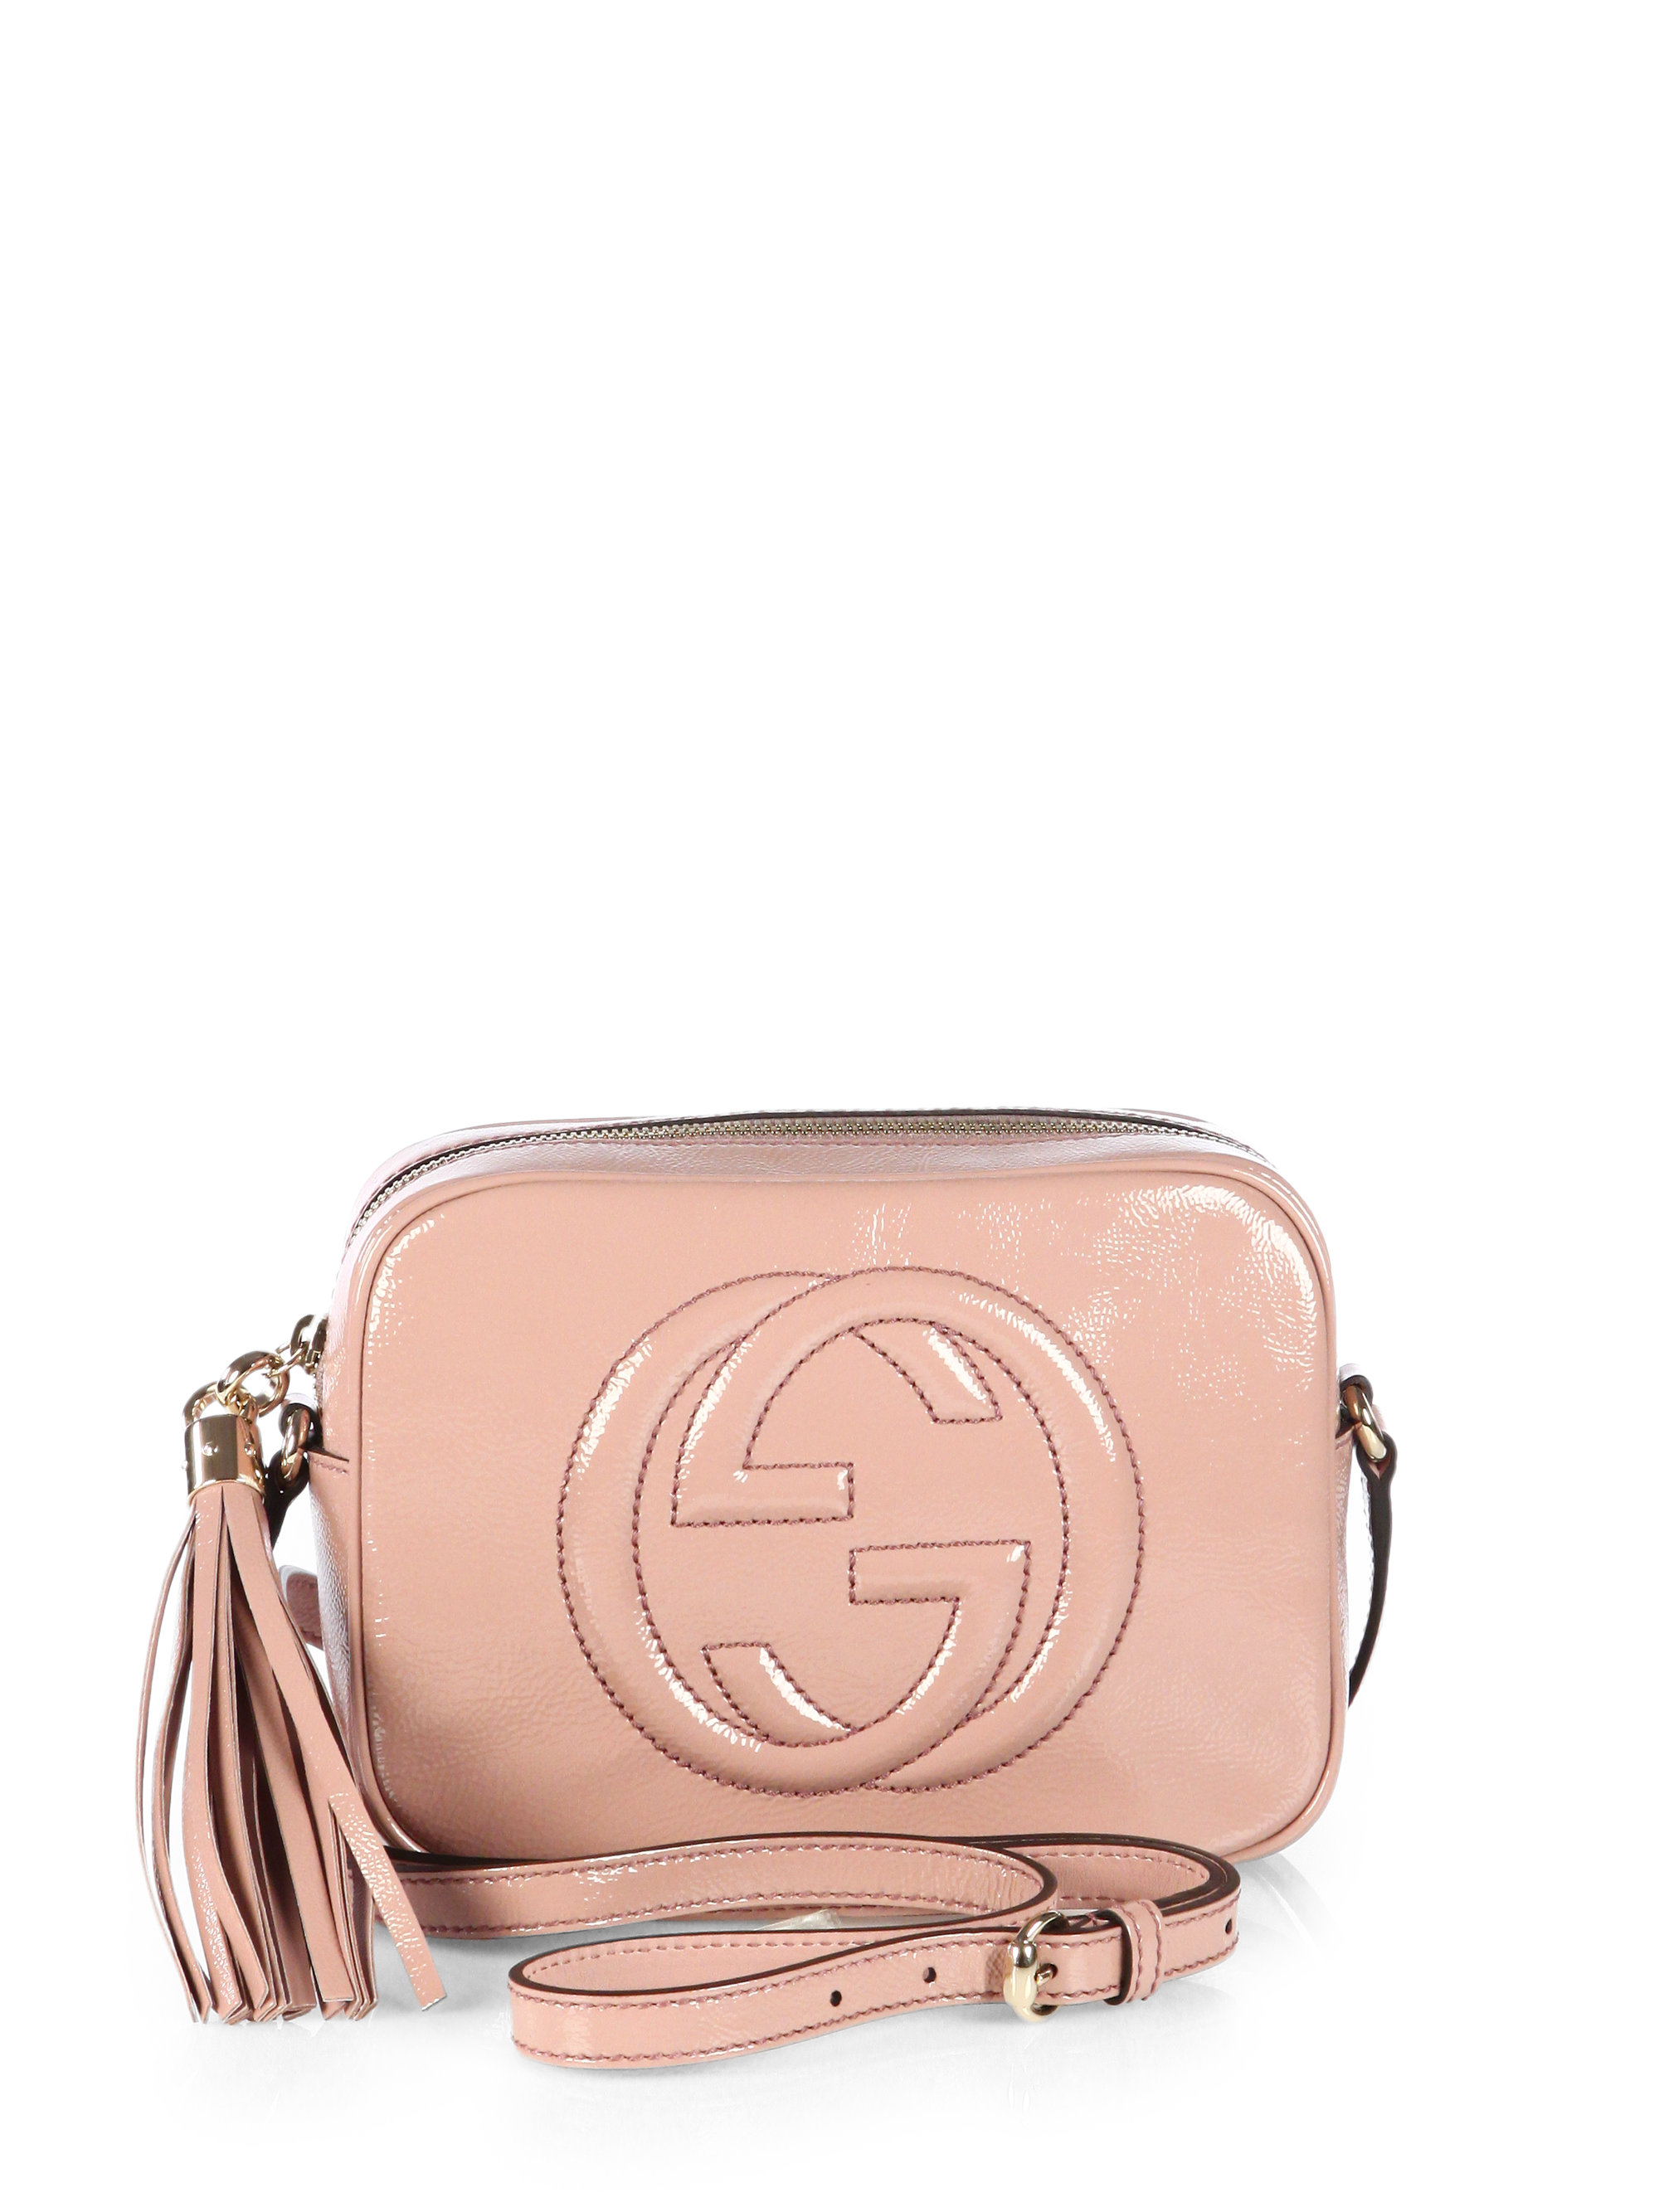 Gucci Soho Small Leather Disco Bag Colors | semashow.com